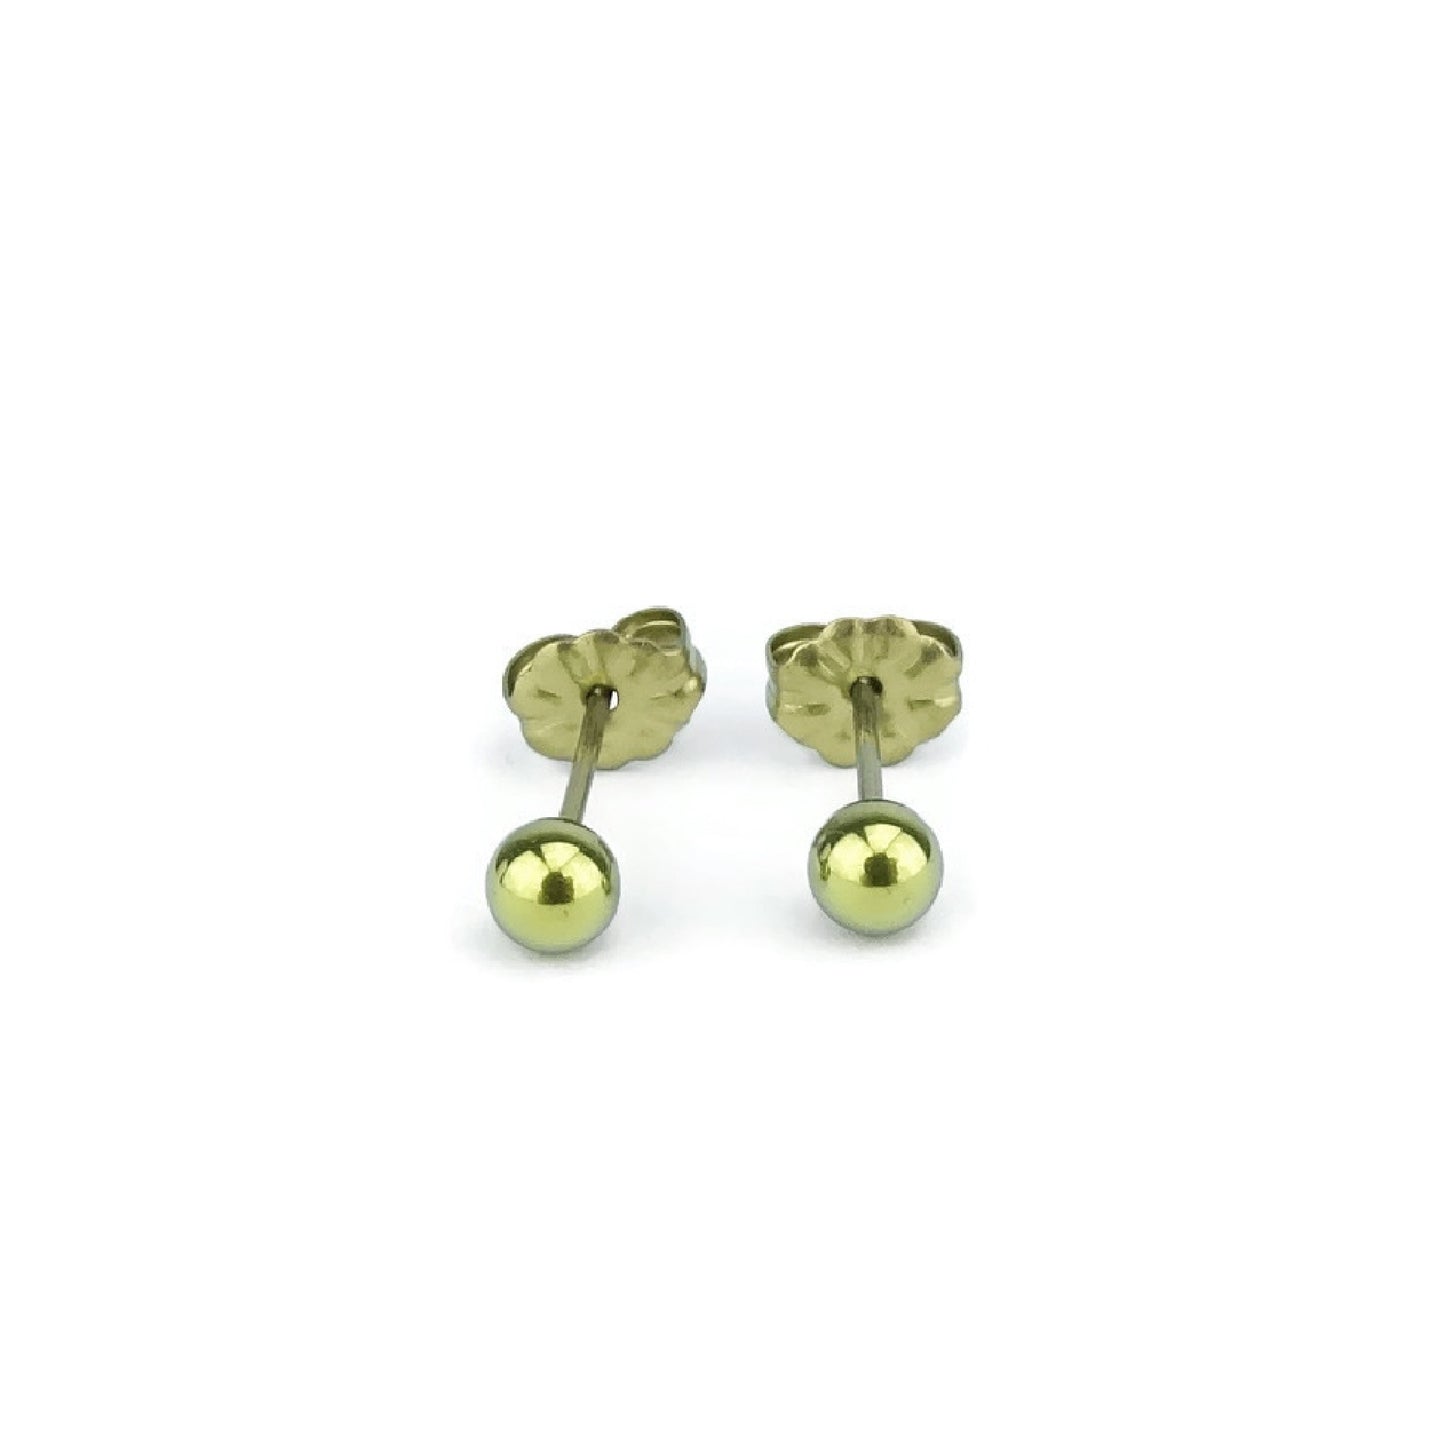 4mm Gold Stud Earrings Titanium Ball Posts